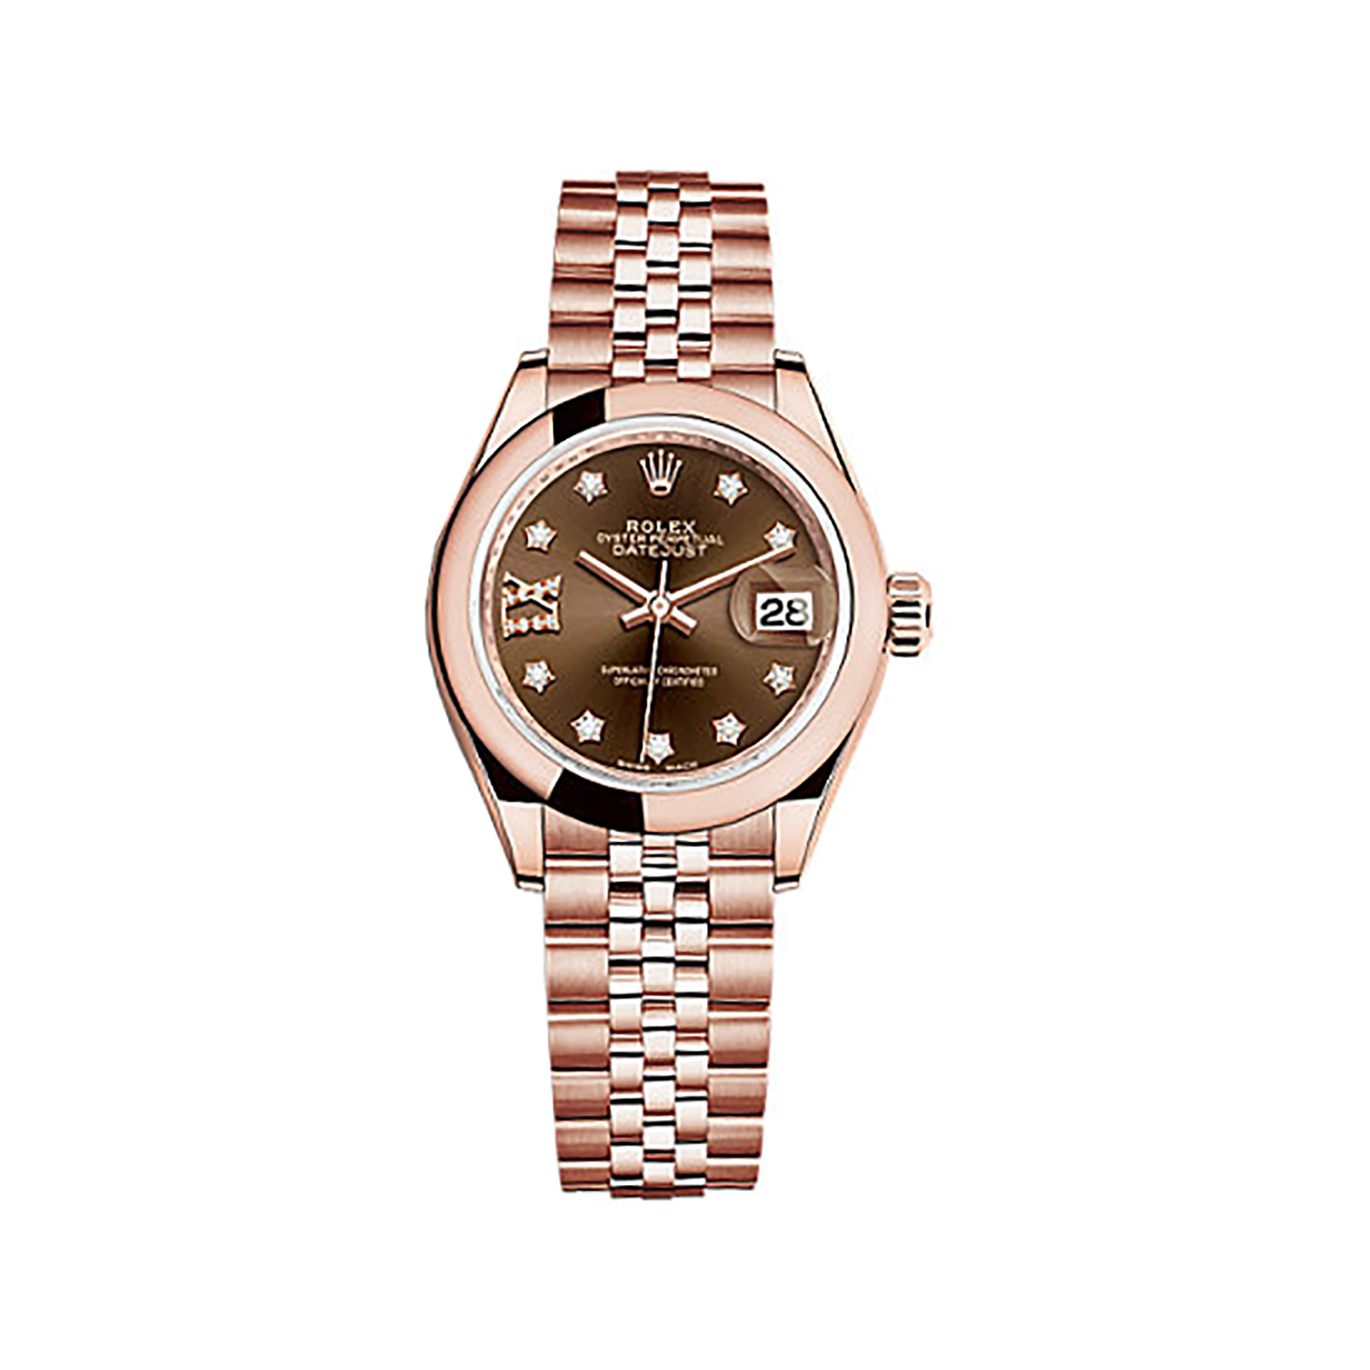 Lady-Datejust 28 279165 Rose Gold Watch (Chocolate Set with Diamonds)